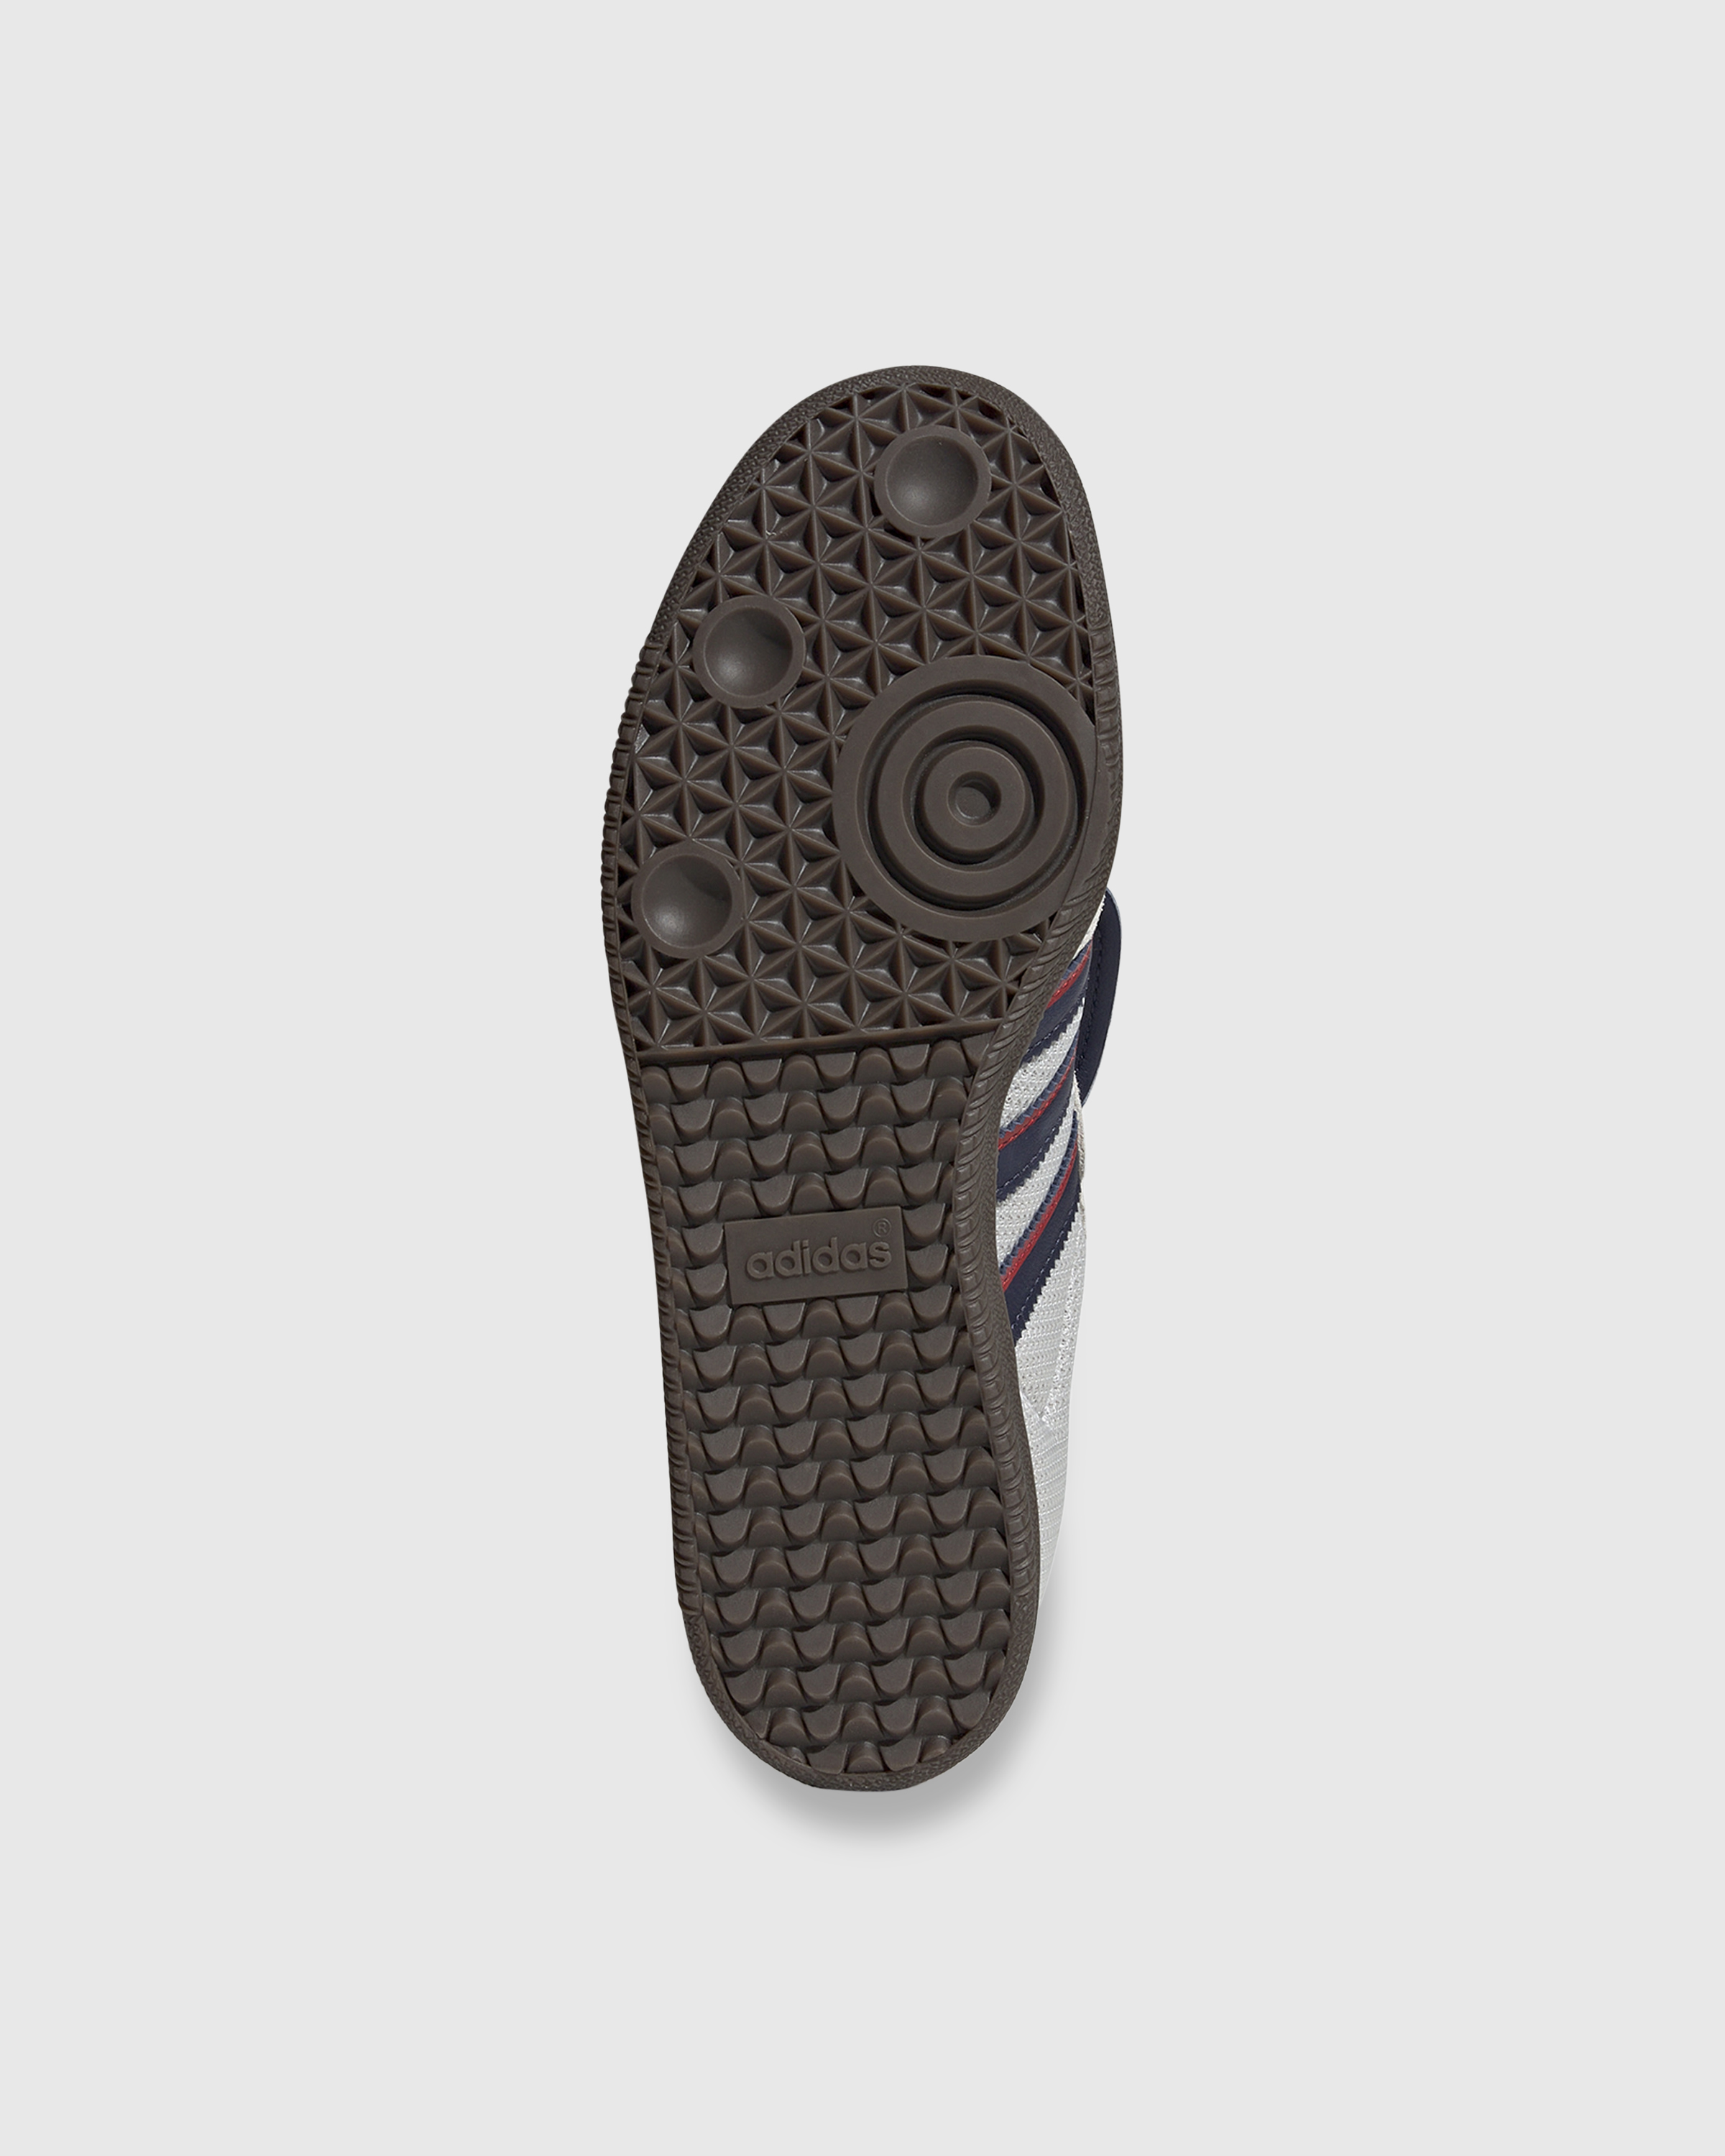 Adidas – Samba LT White/Blue/Gum - Low Top Sneakers - White - Image 6